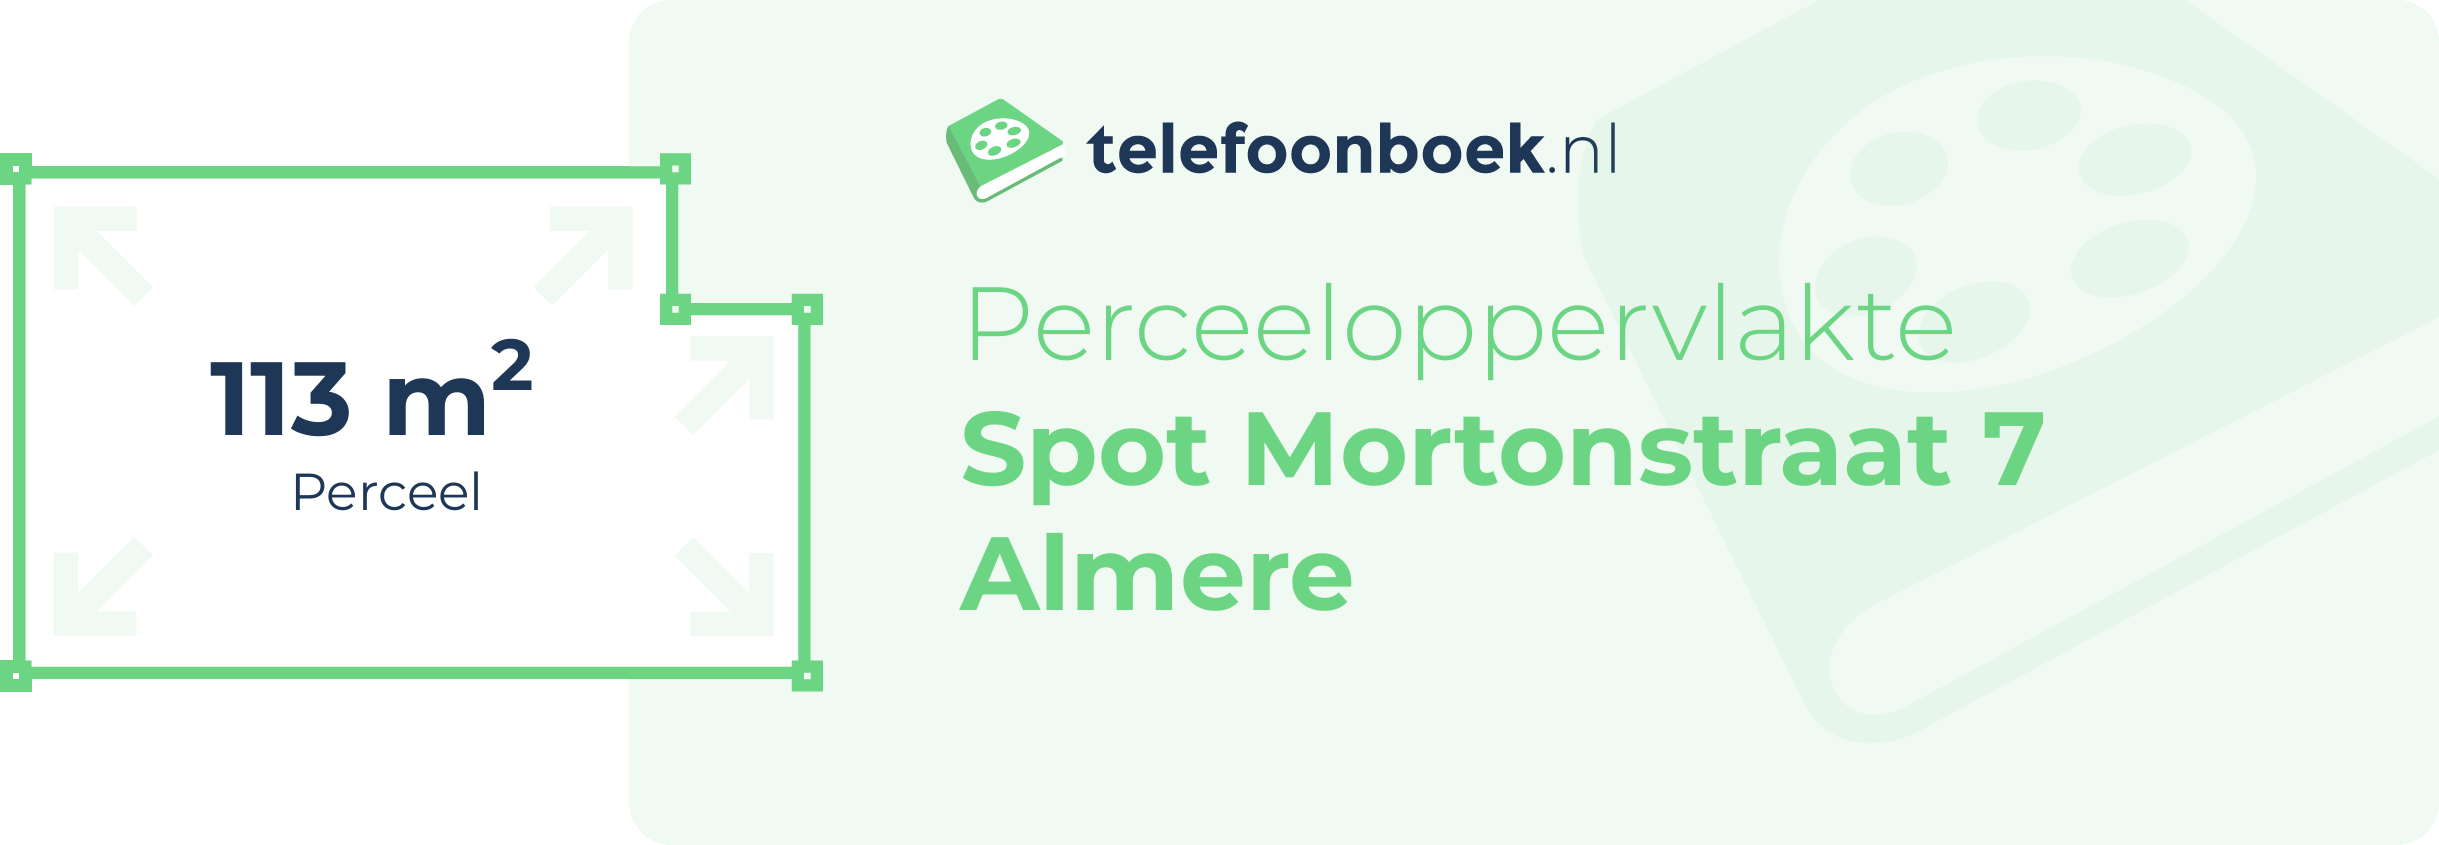 Perceeloppervlakte Spot Mortonstraat 7 Almere